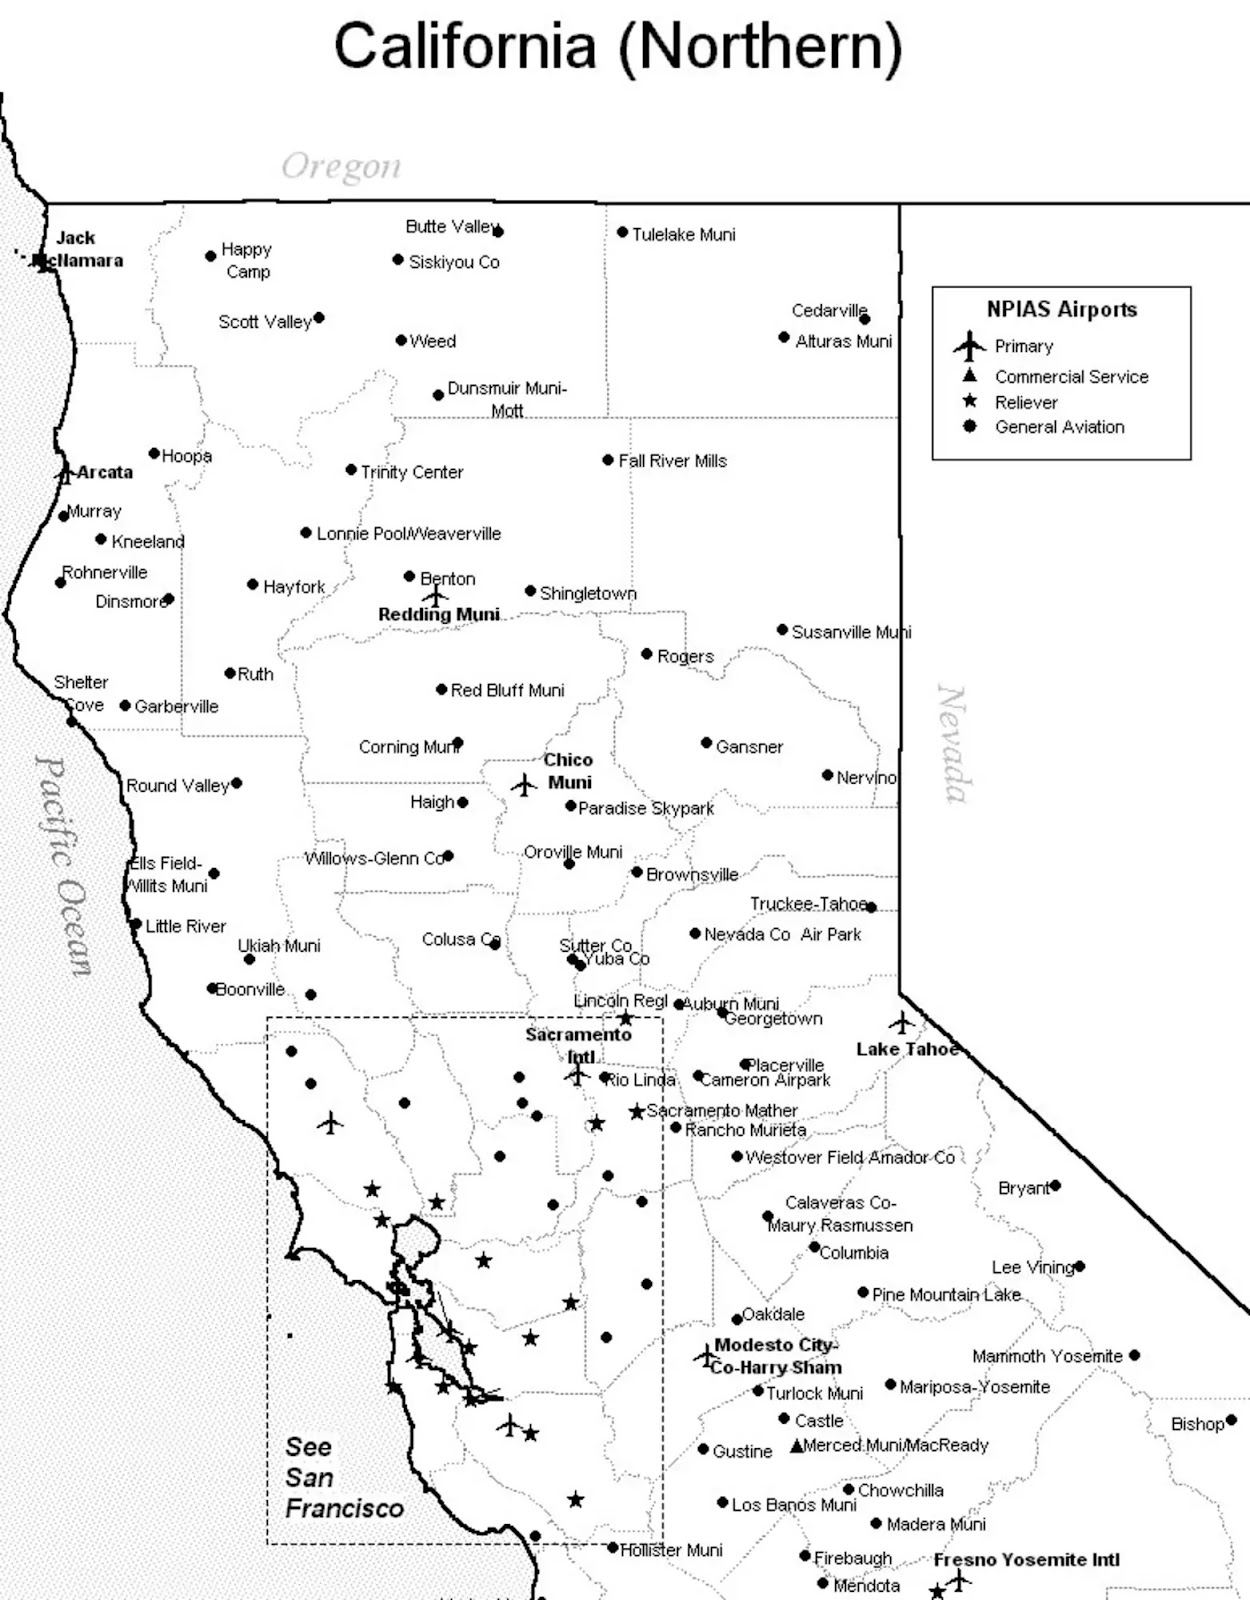 California Airports Map 